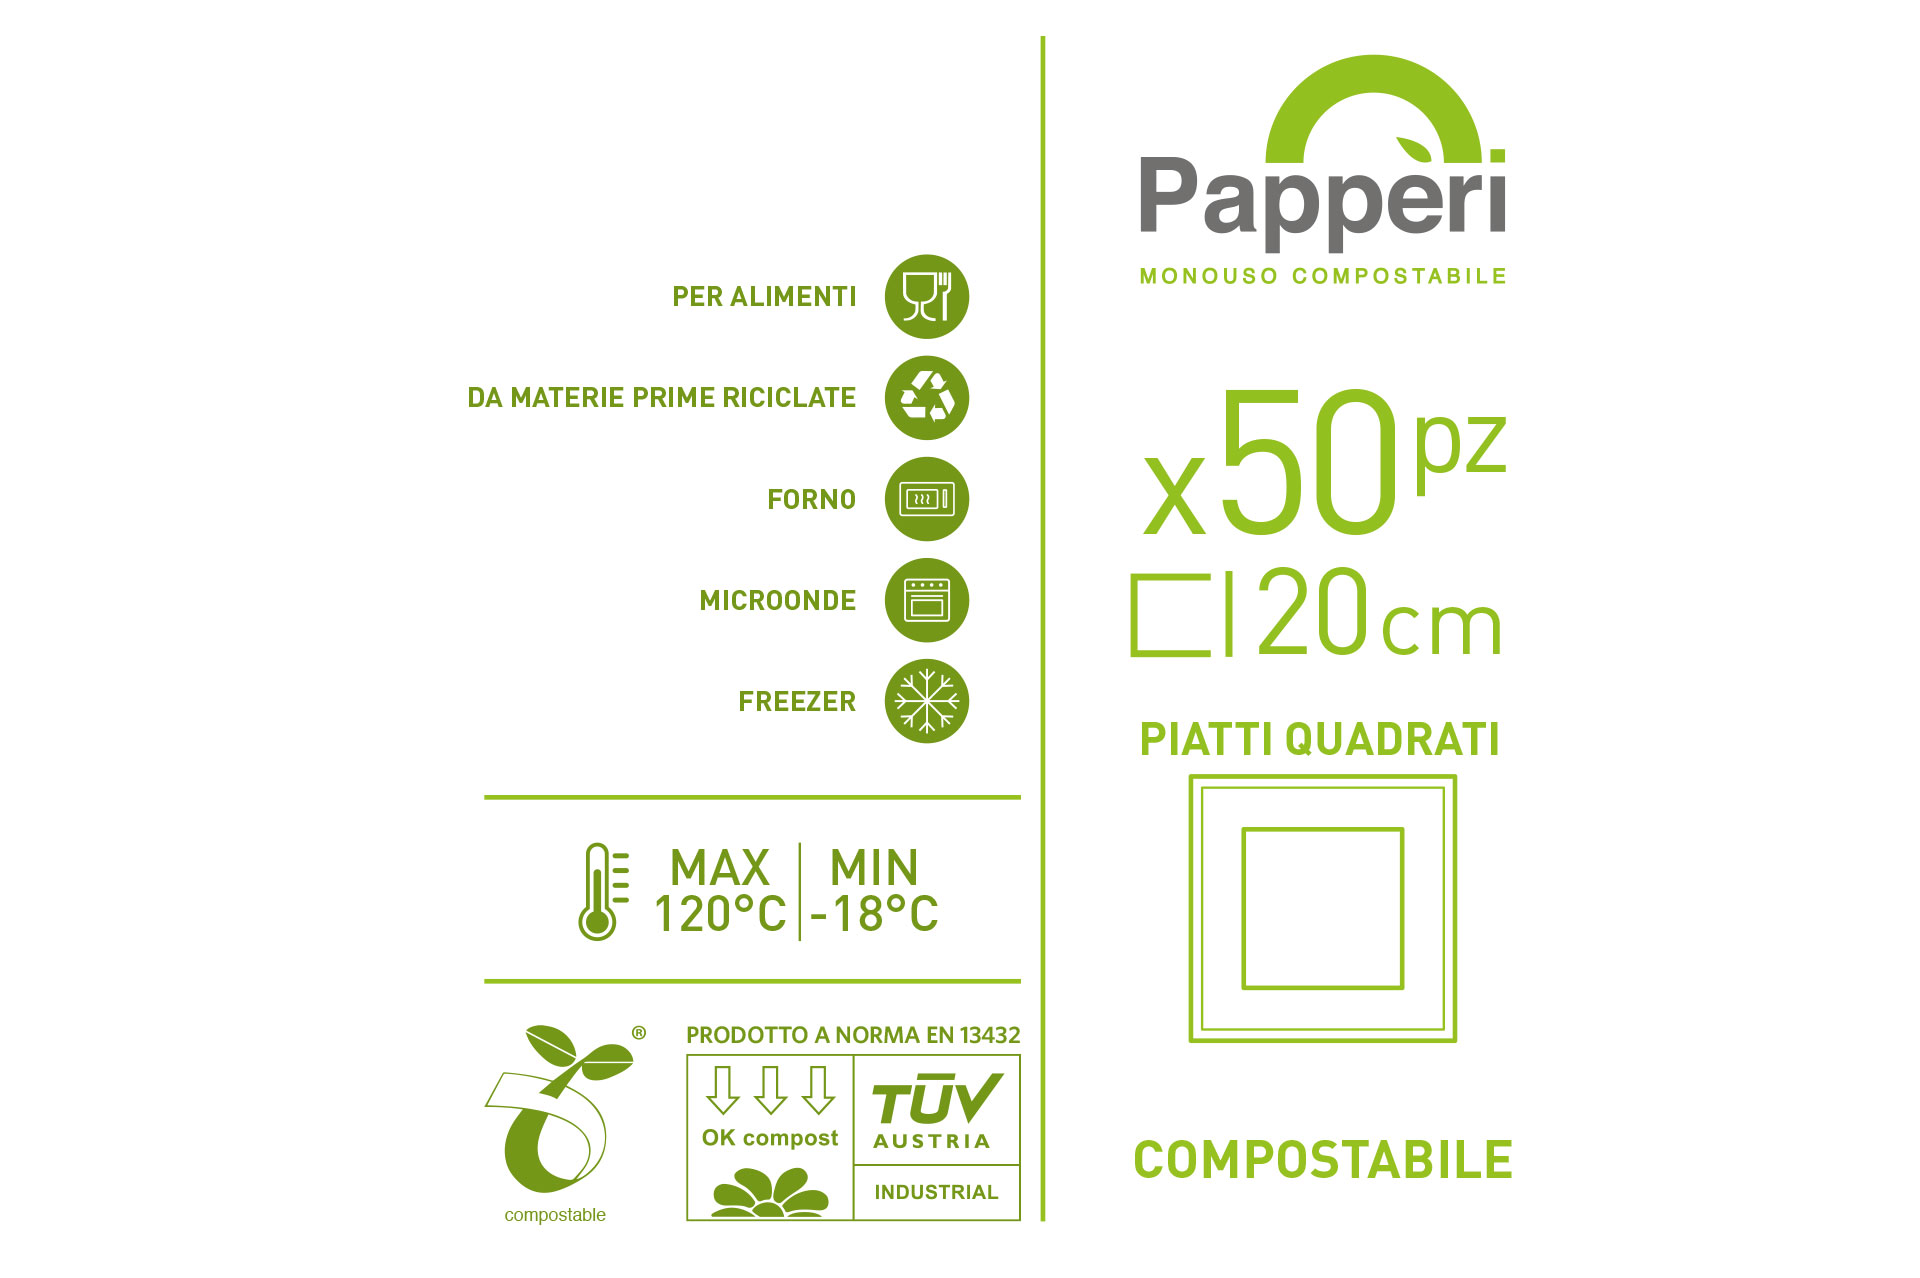 alternativa di carta ecologica biodegradabile bagassa compostabile resistenti e usa e getta 100% naturale in canna da zucchero 50 pezzi 11,2 x 13,2 cm Ahippob Piatti di carta quadrati per feste 